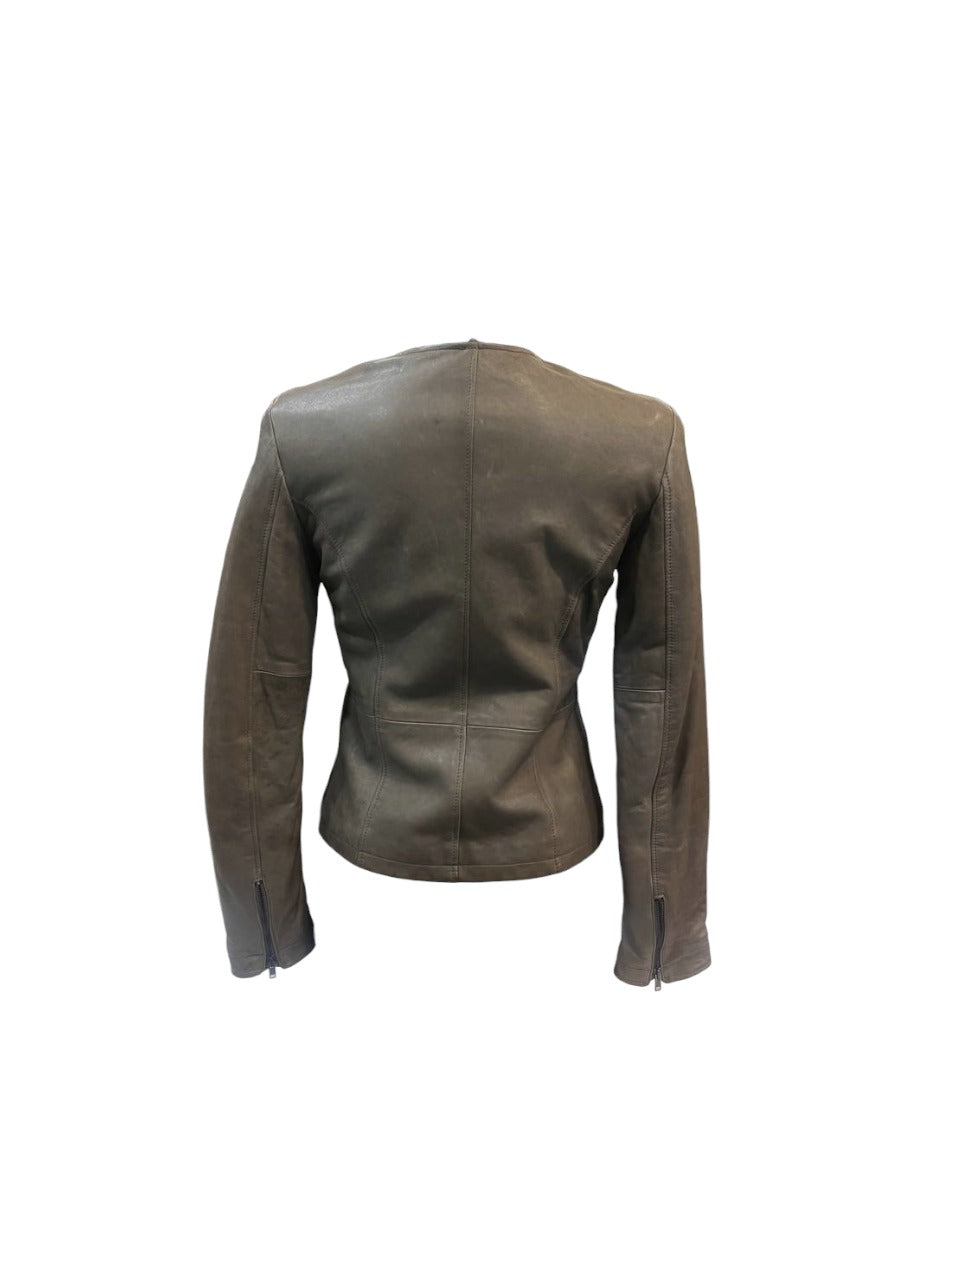 VLAB Women's Leather Jacket